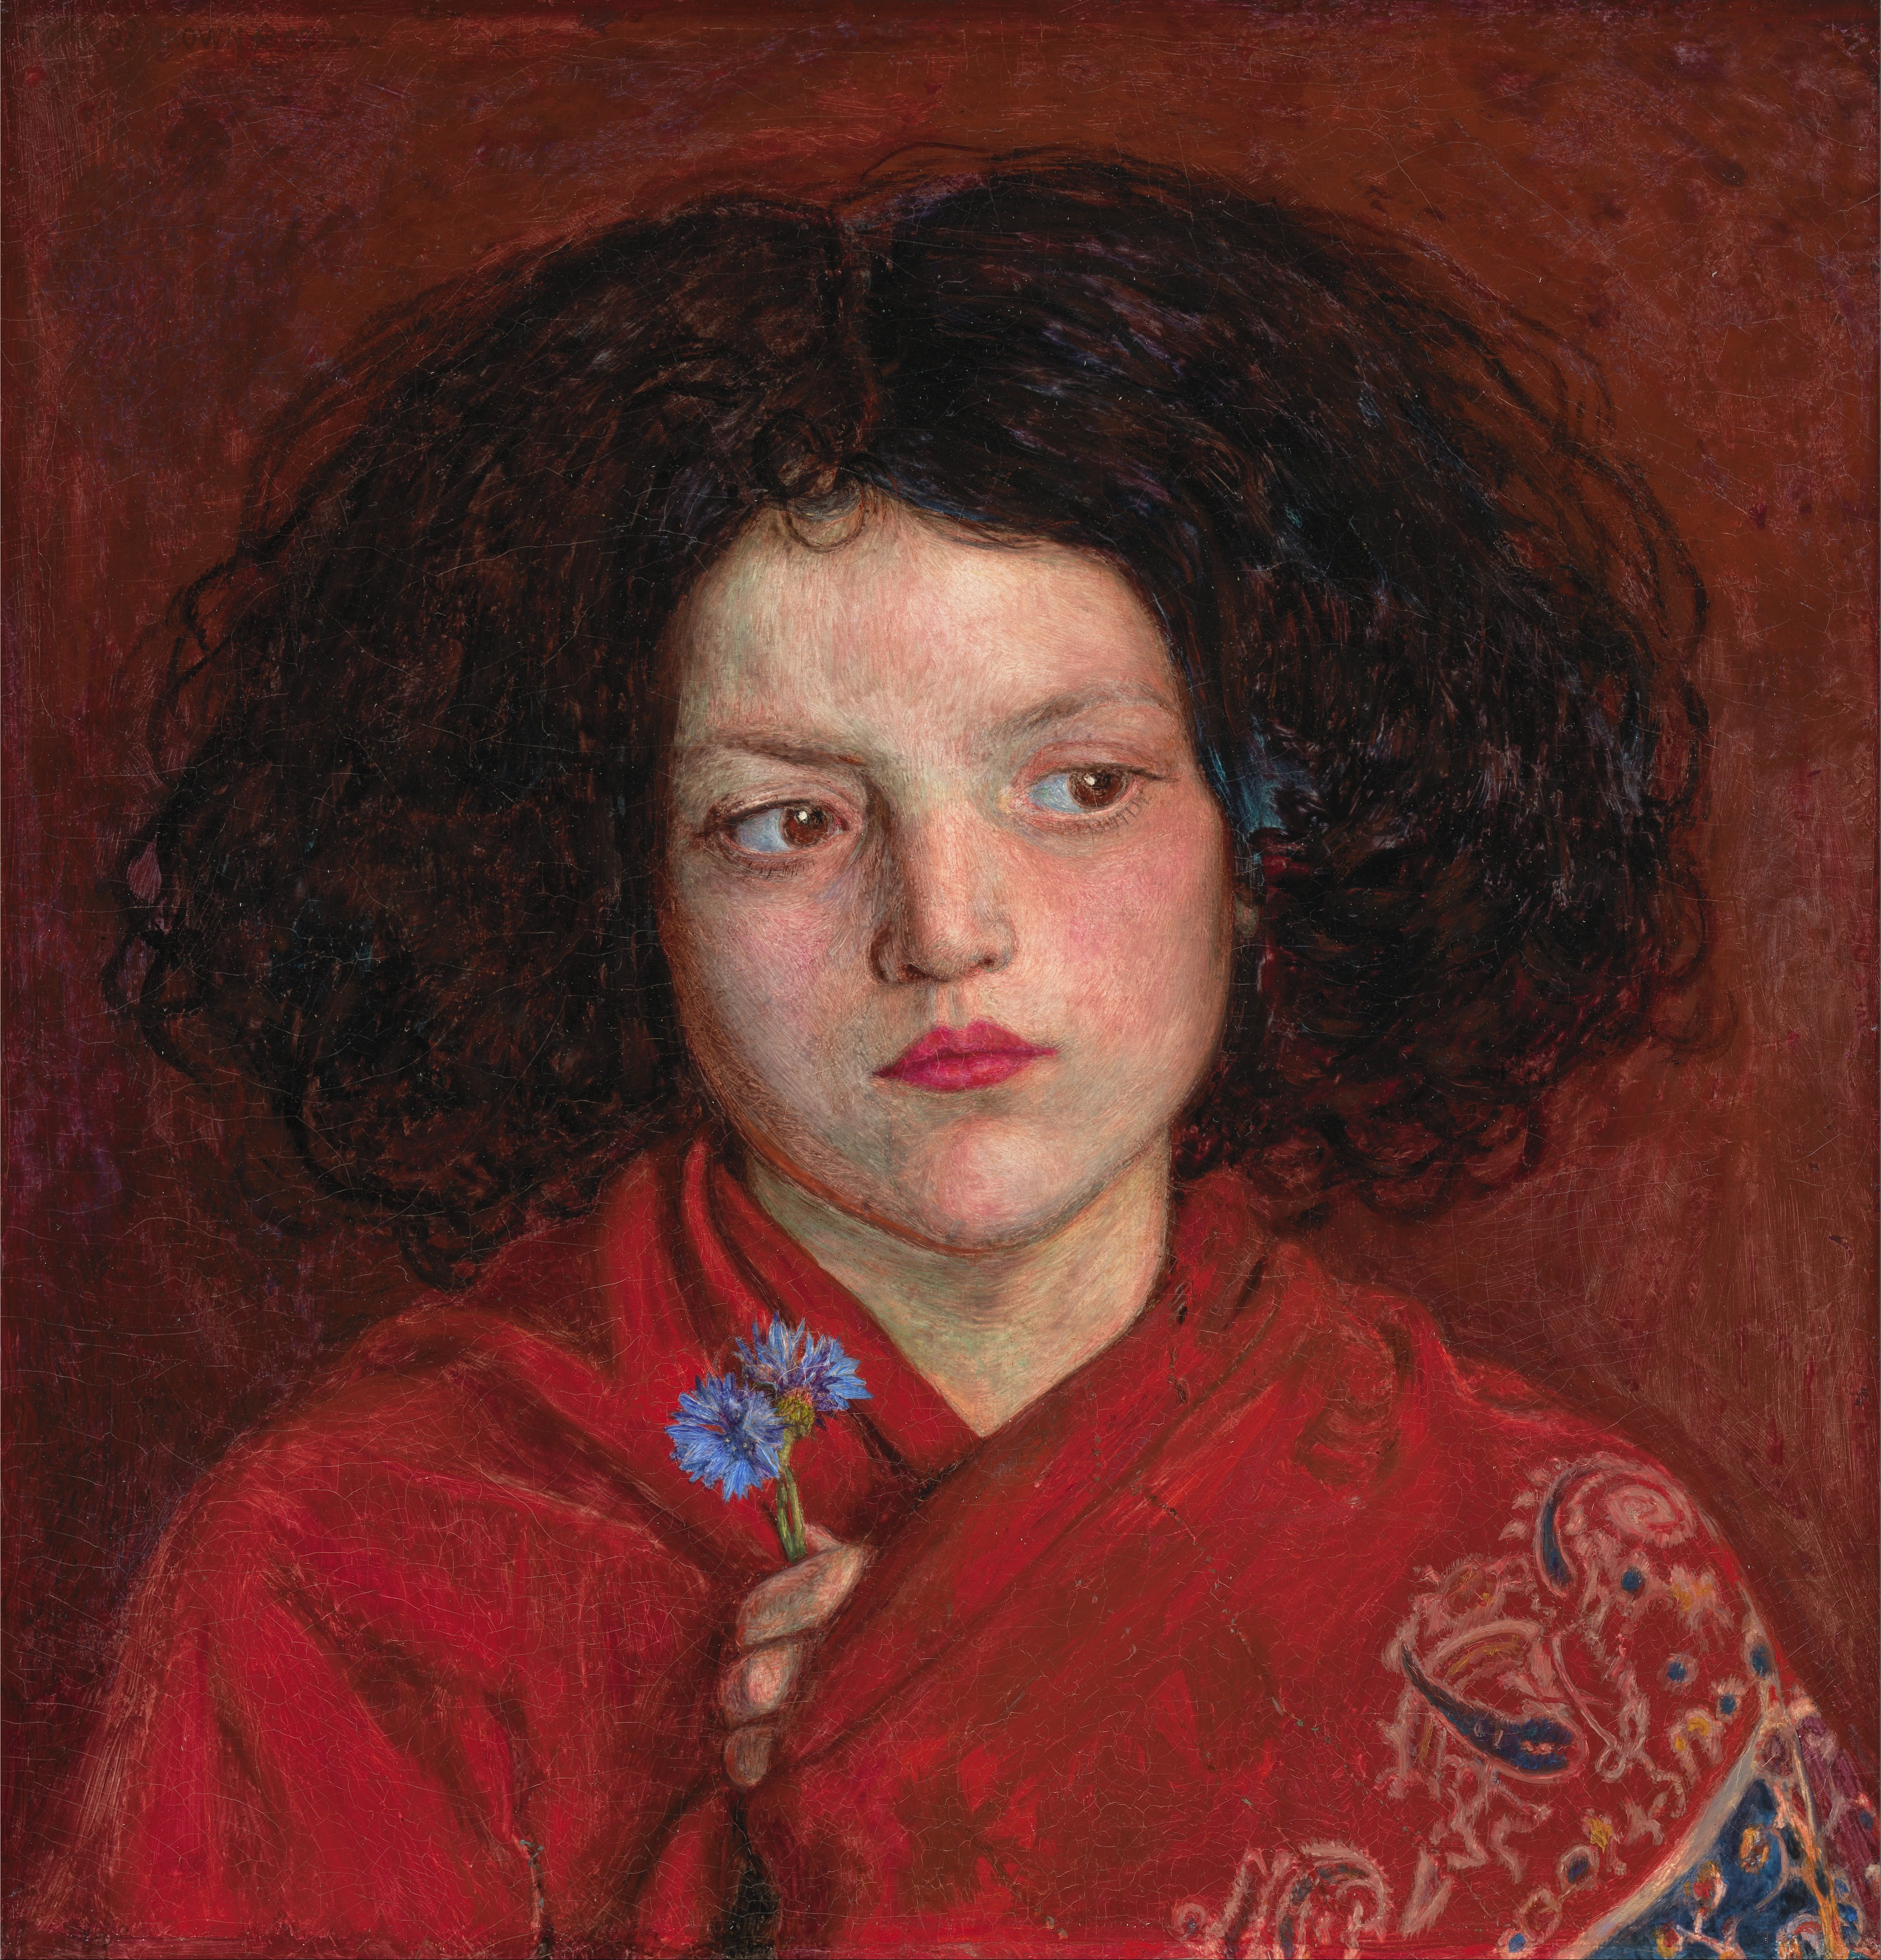 https://upload.wikimedia.org/wikipedia/commons/4/4c/Ford_Madox_Brown_-_The_Irish_Girl_-_Google_Art_Project.jpg